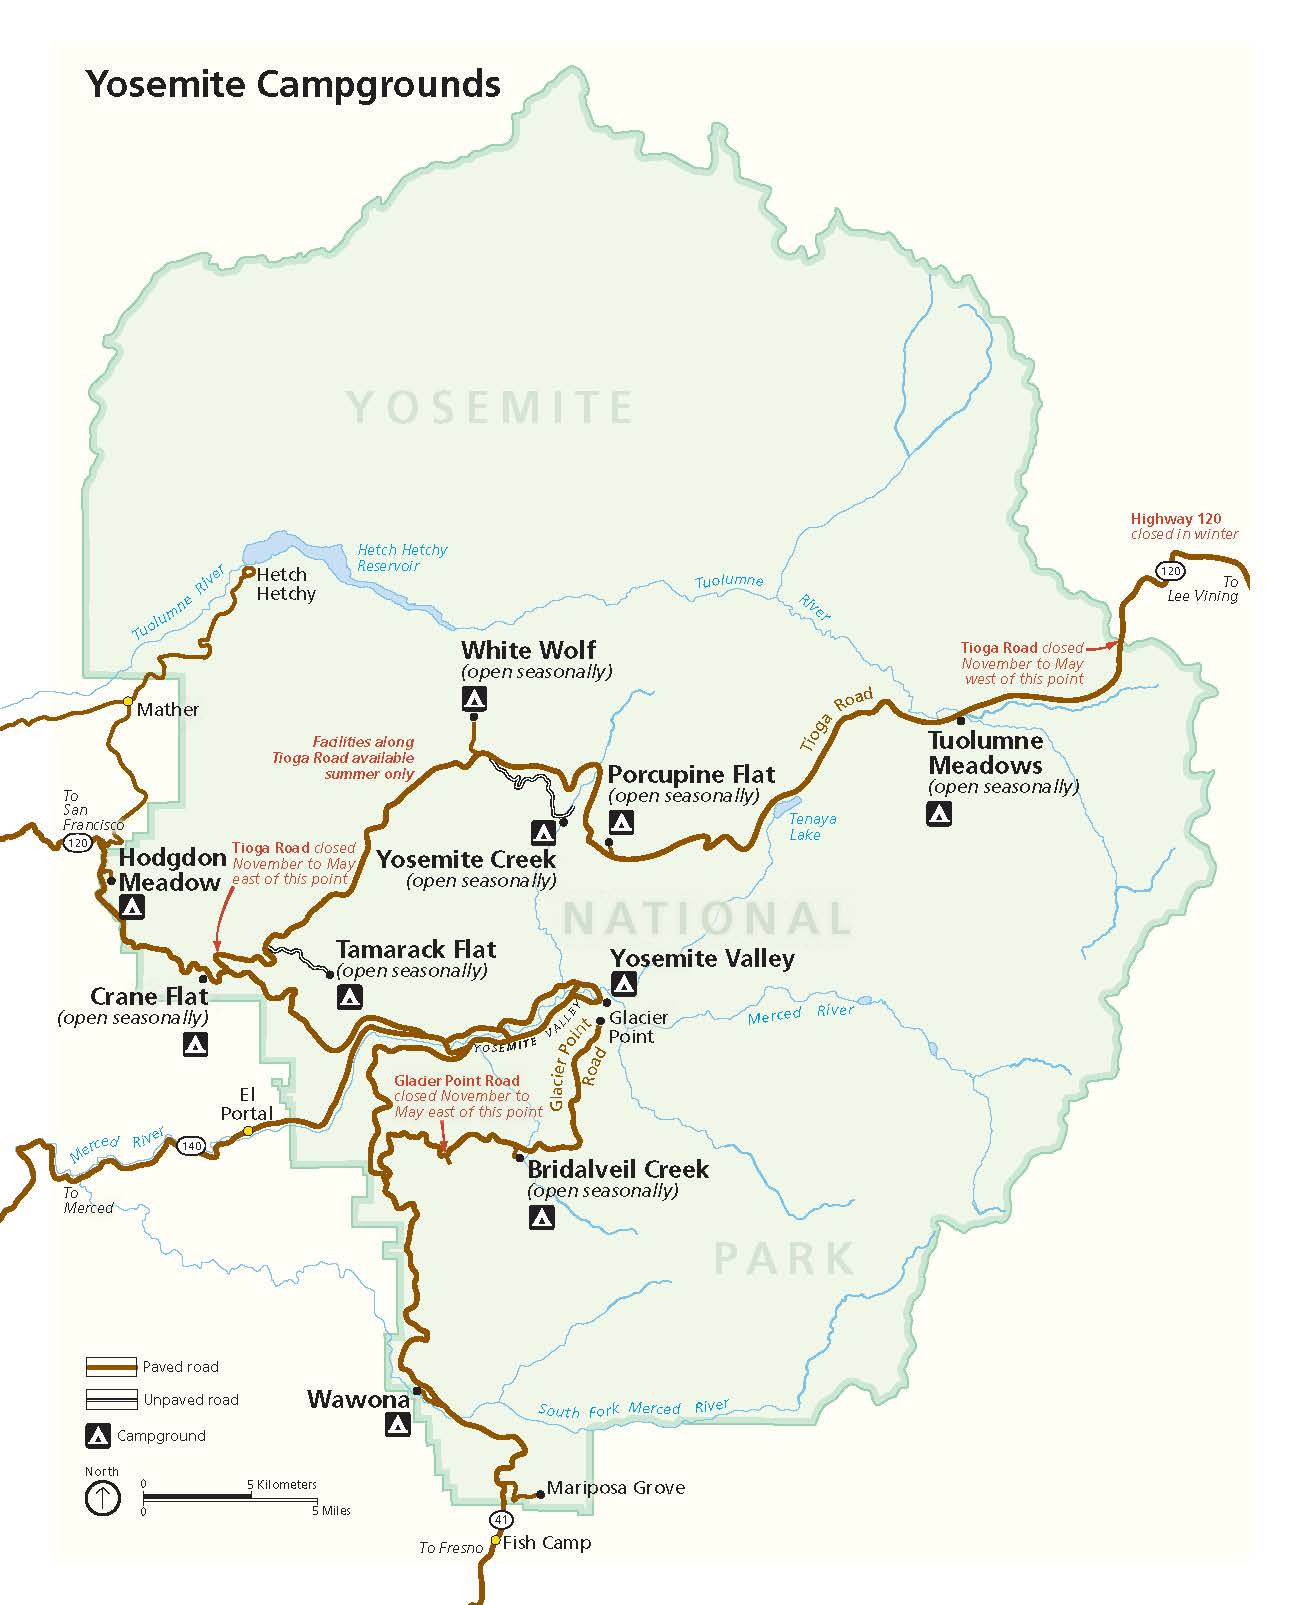 Yosemite Campground Map